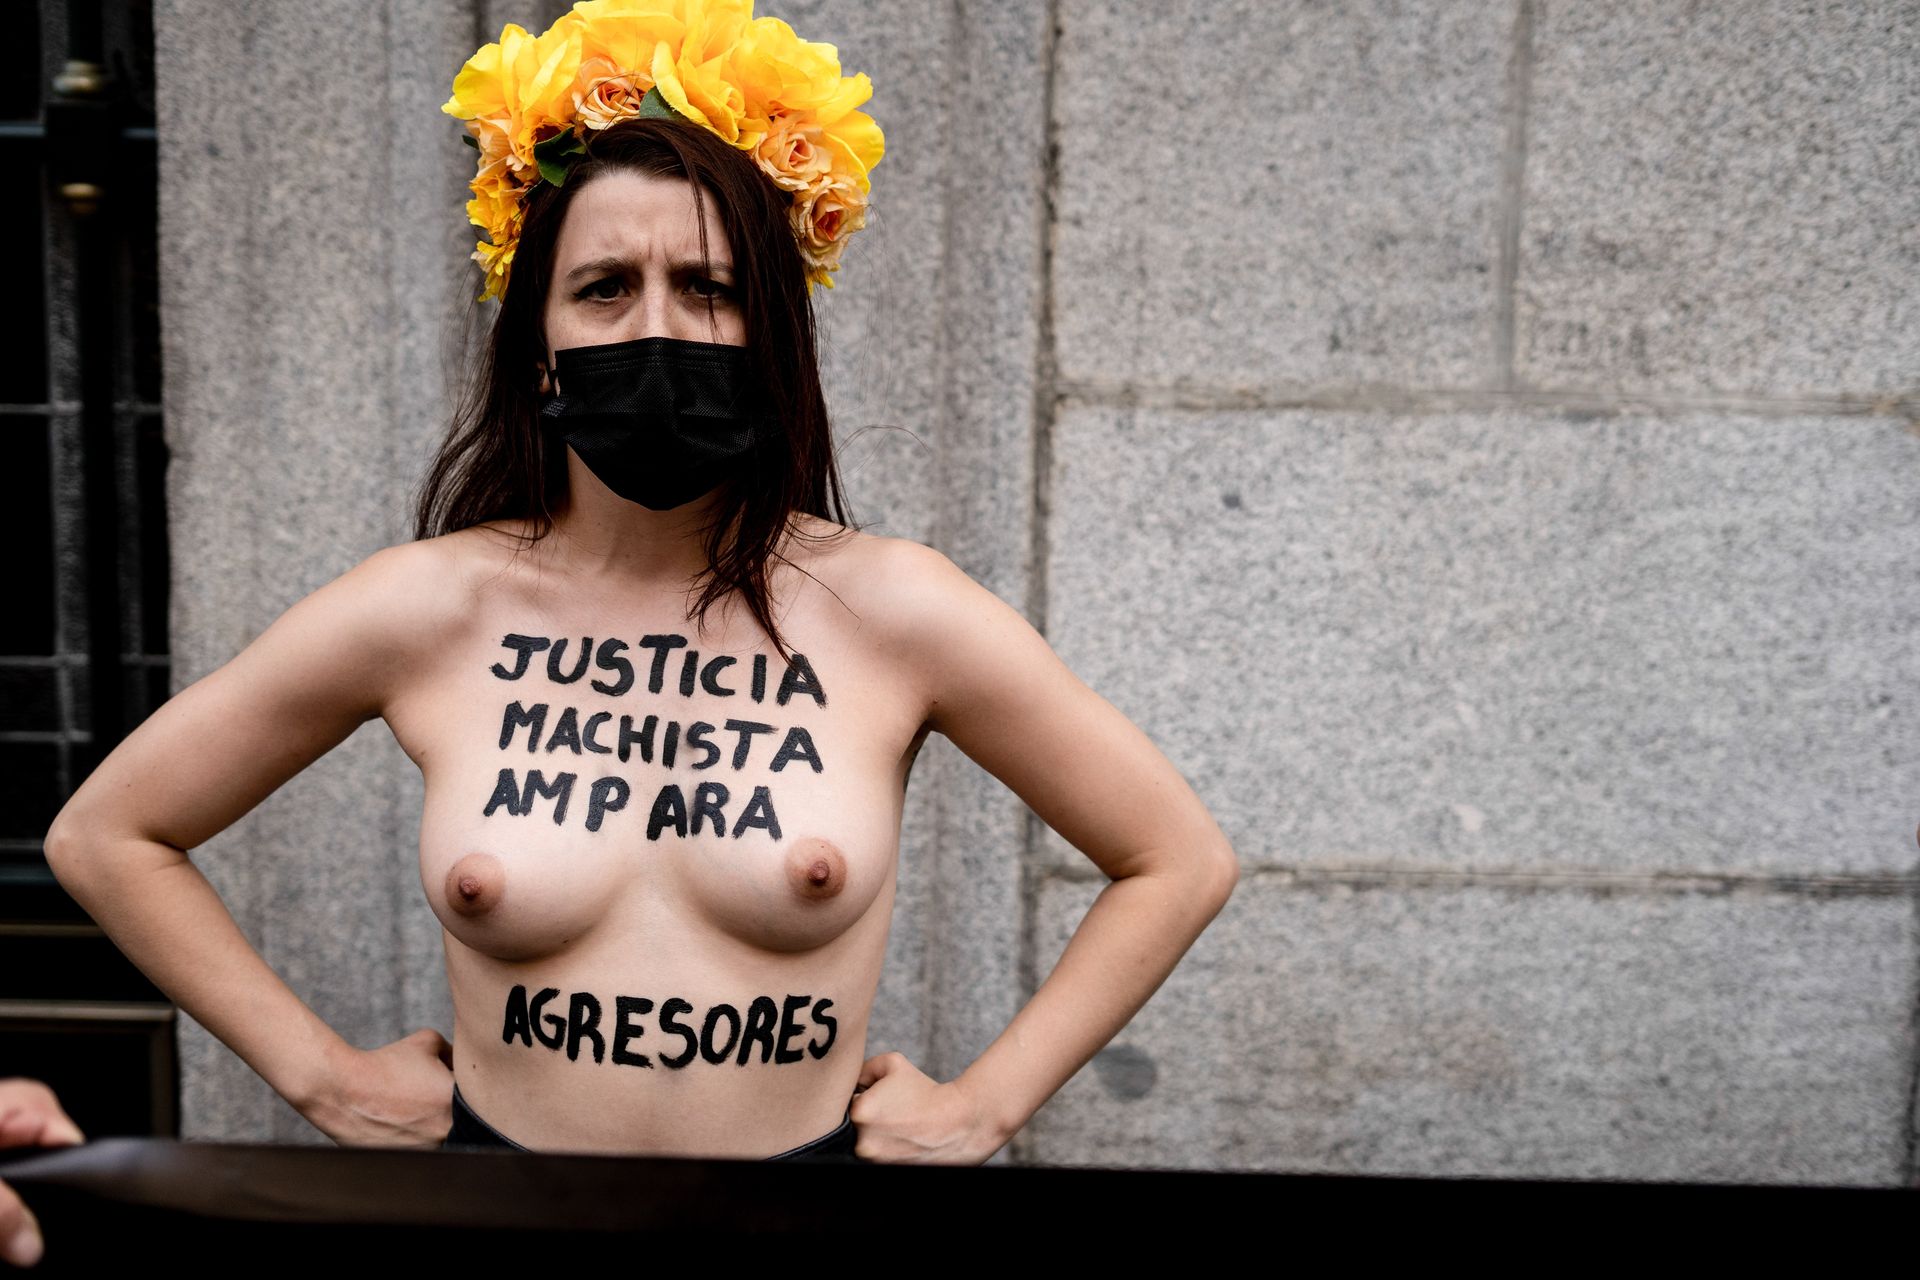 Nude-Femen-Activists-The-Fappening-Blog-27.jpg